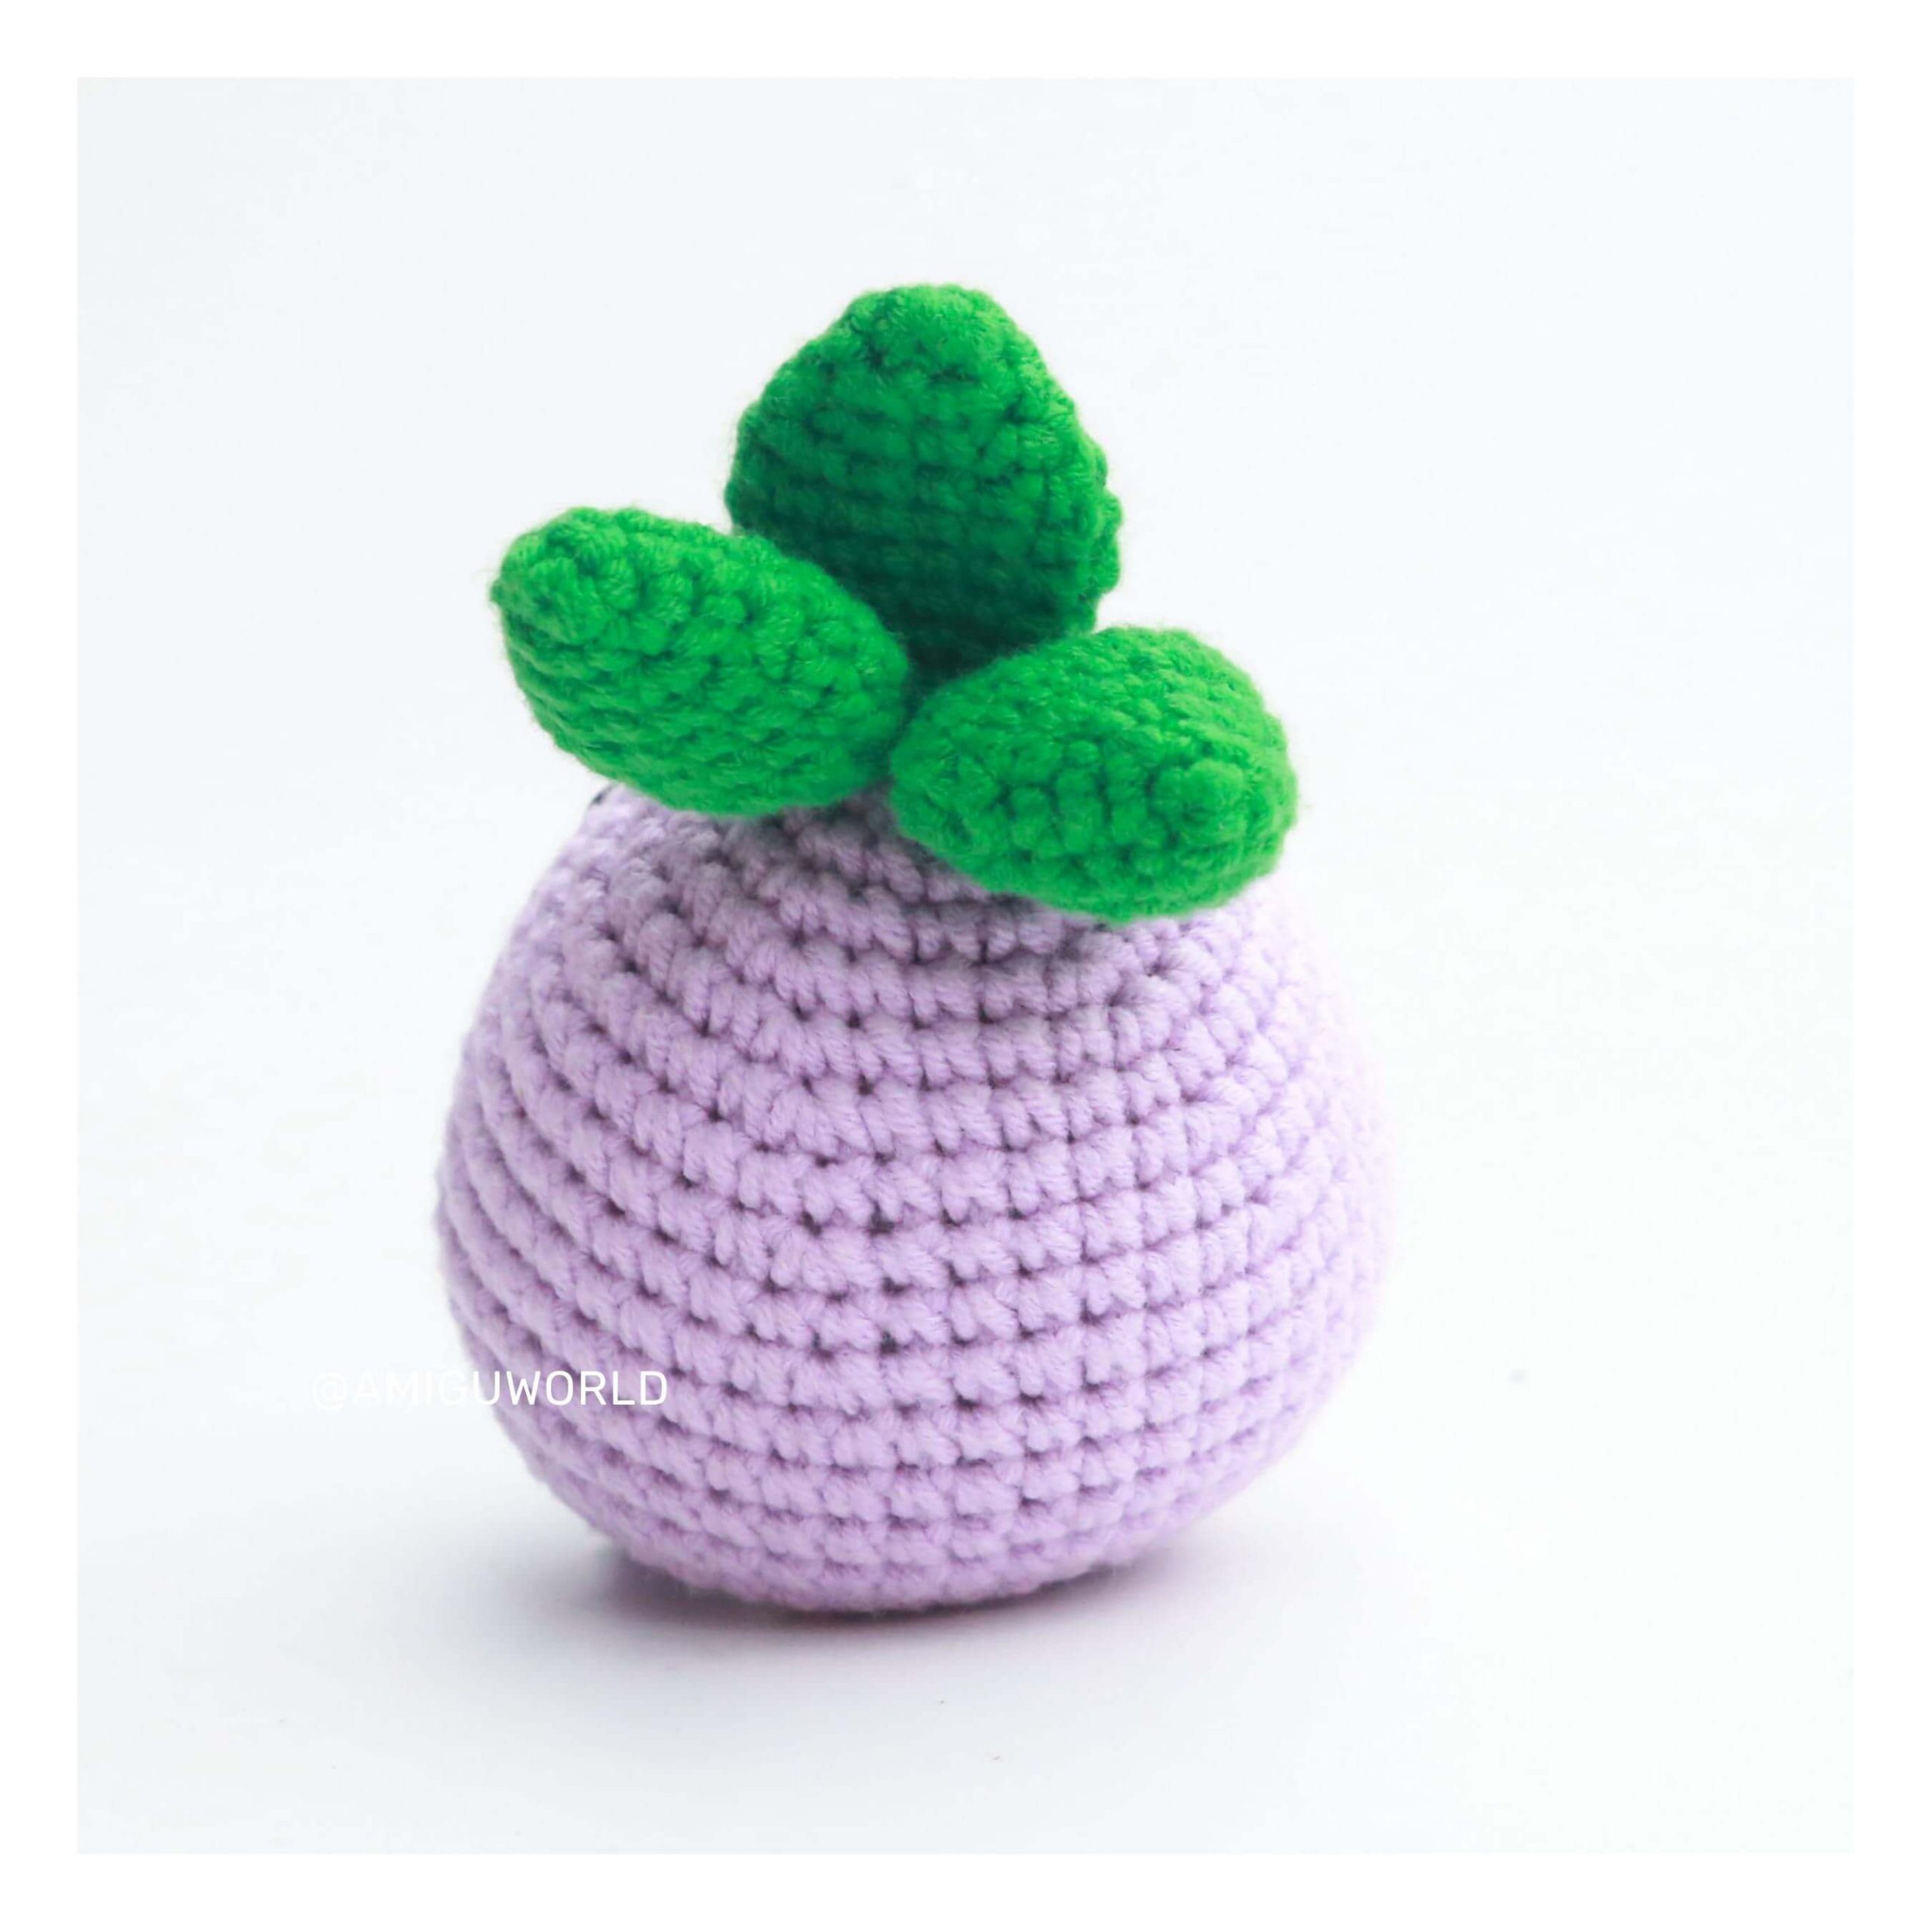 oddish-amigurumi-crochet-pattern (10)